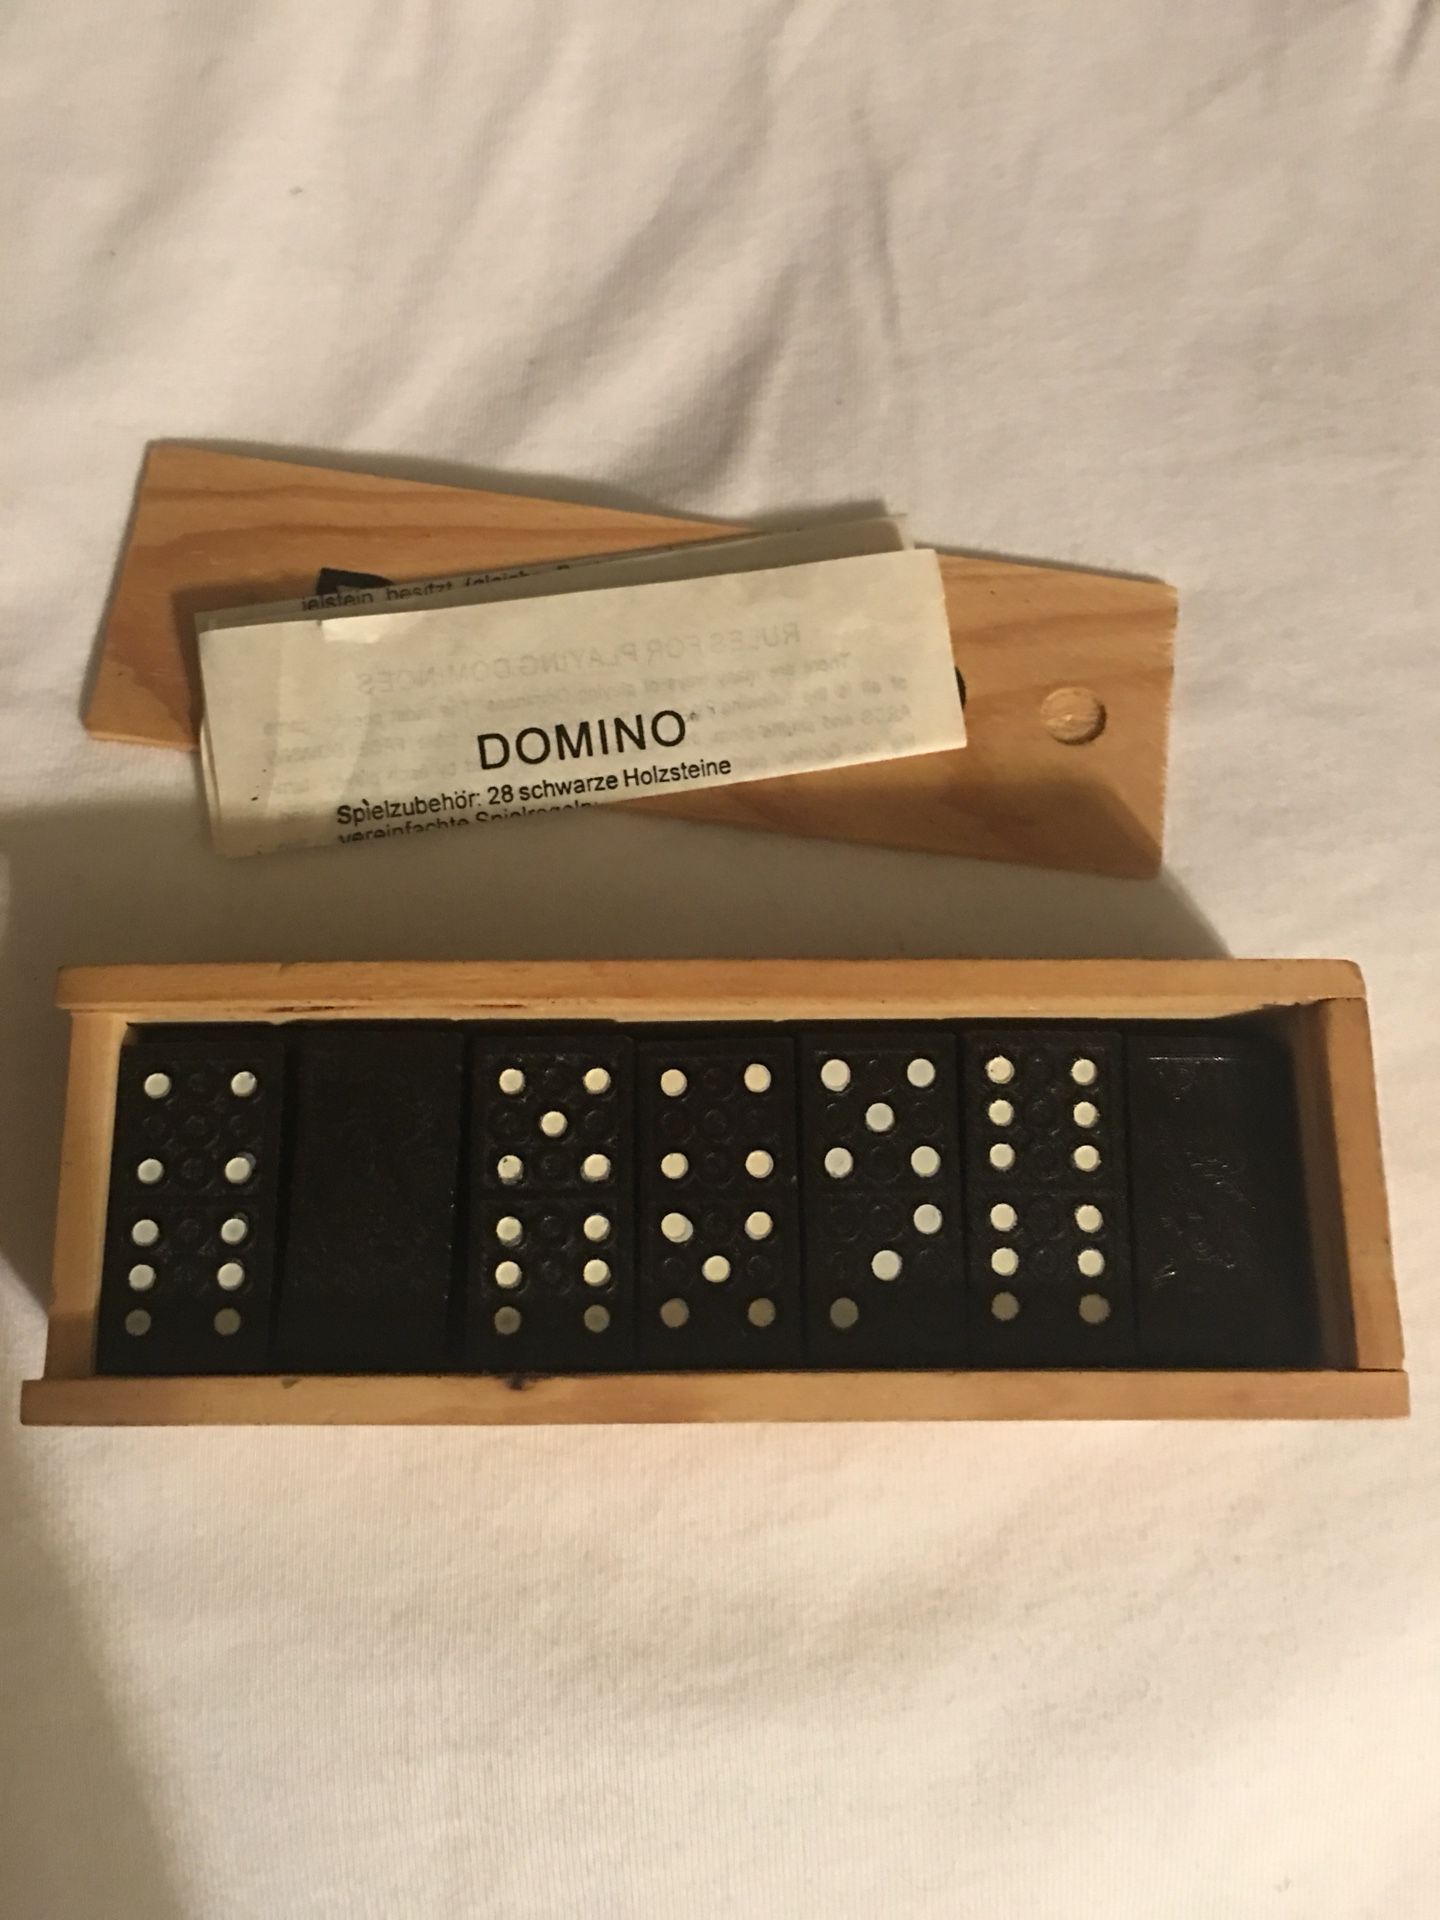 Mini domino game set